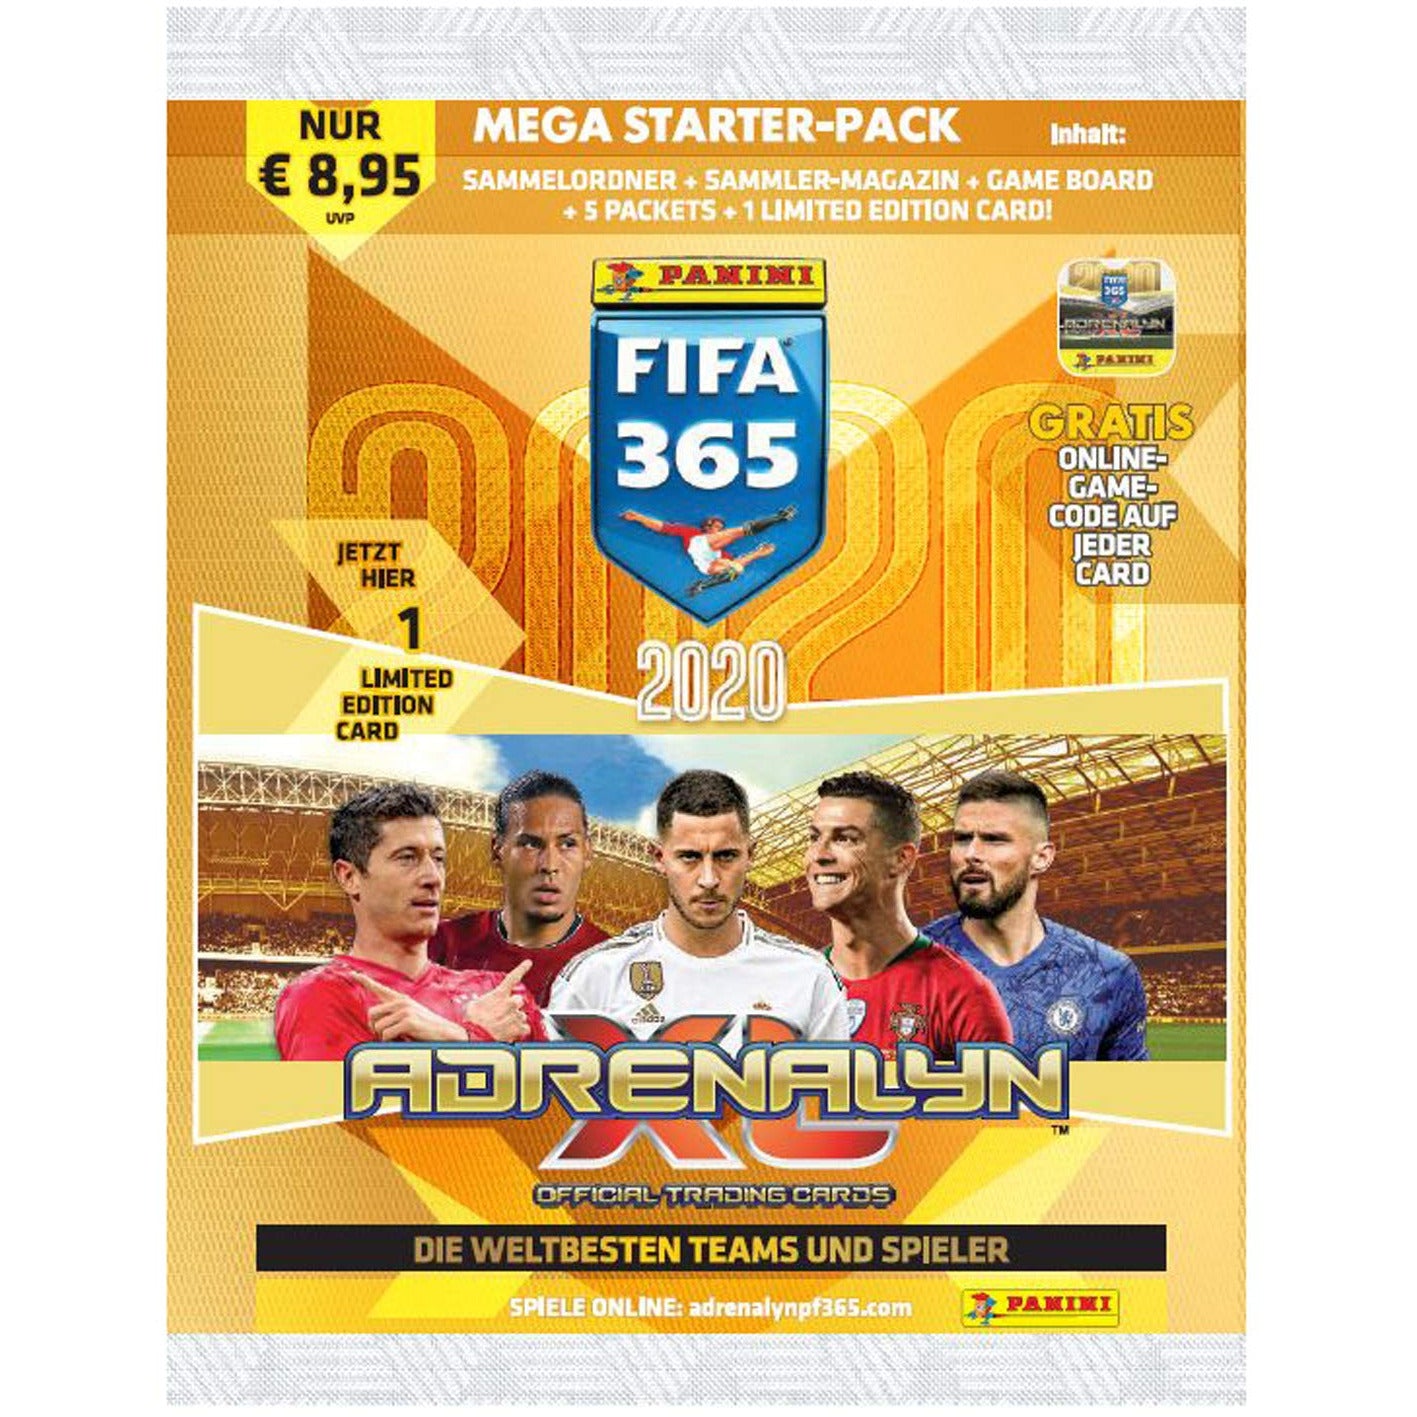 Panini Premier League 2024 Adrenalyn XL Trading Card Game Mega Tin  Assortment